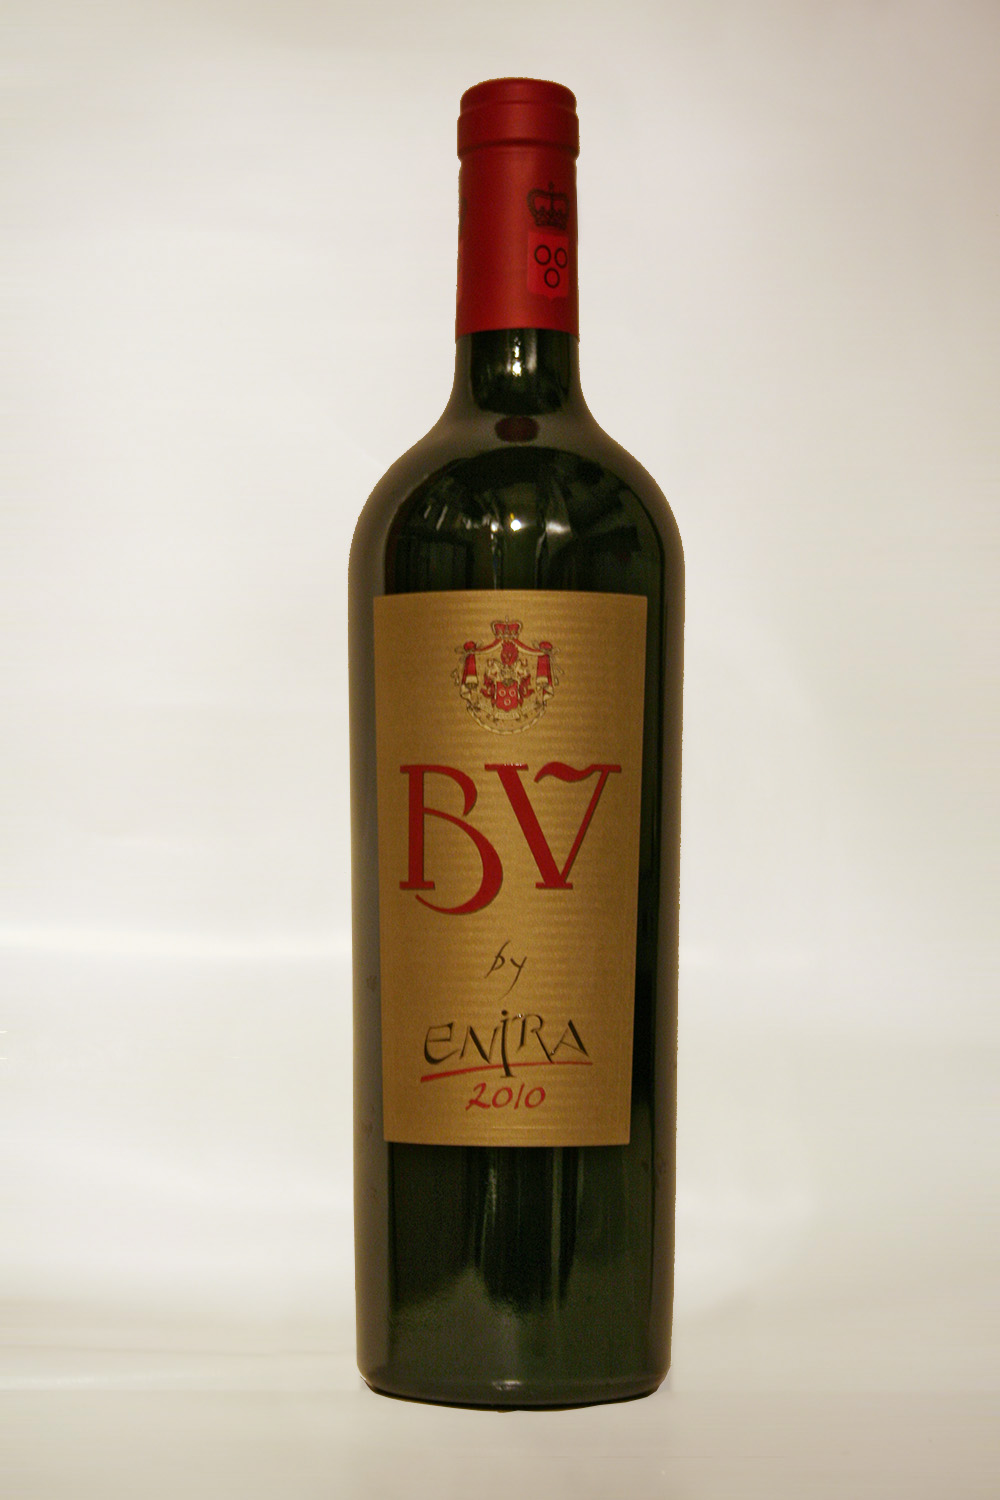 BV by Enira 2010